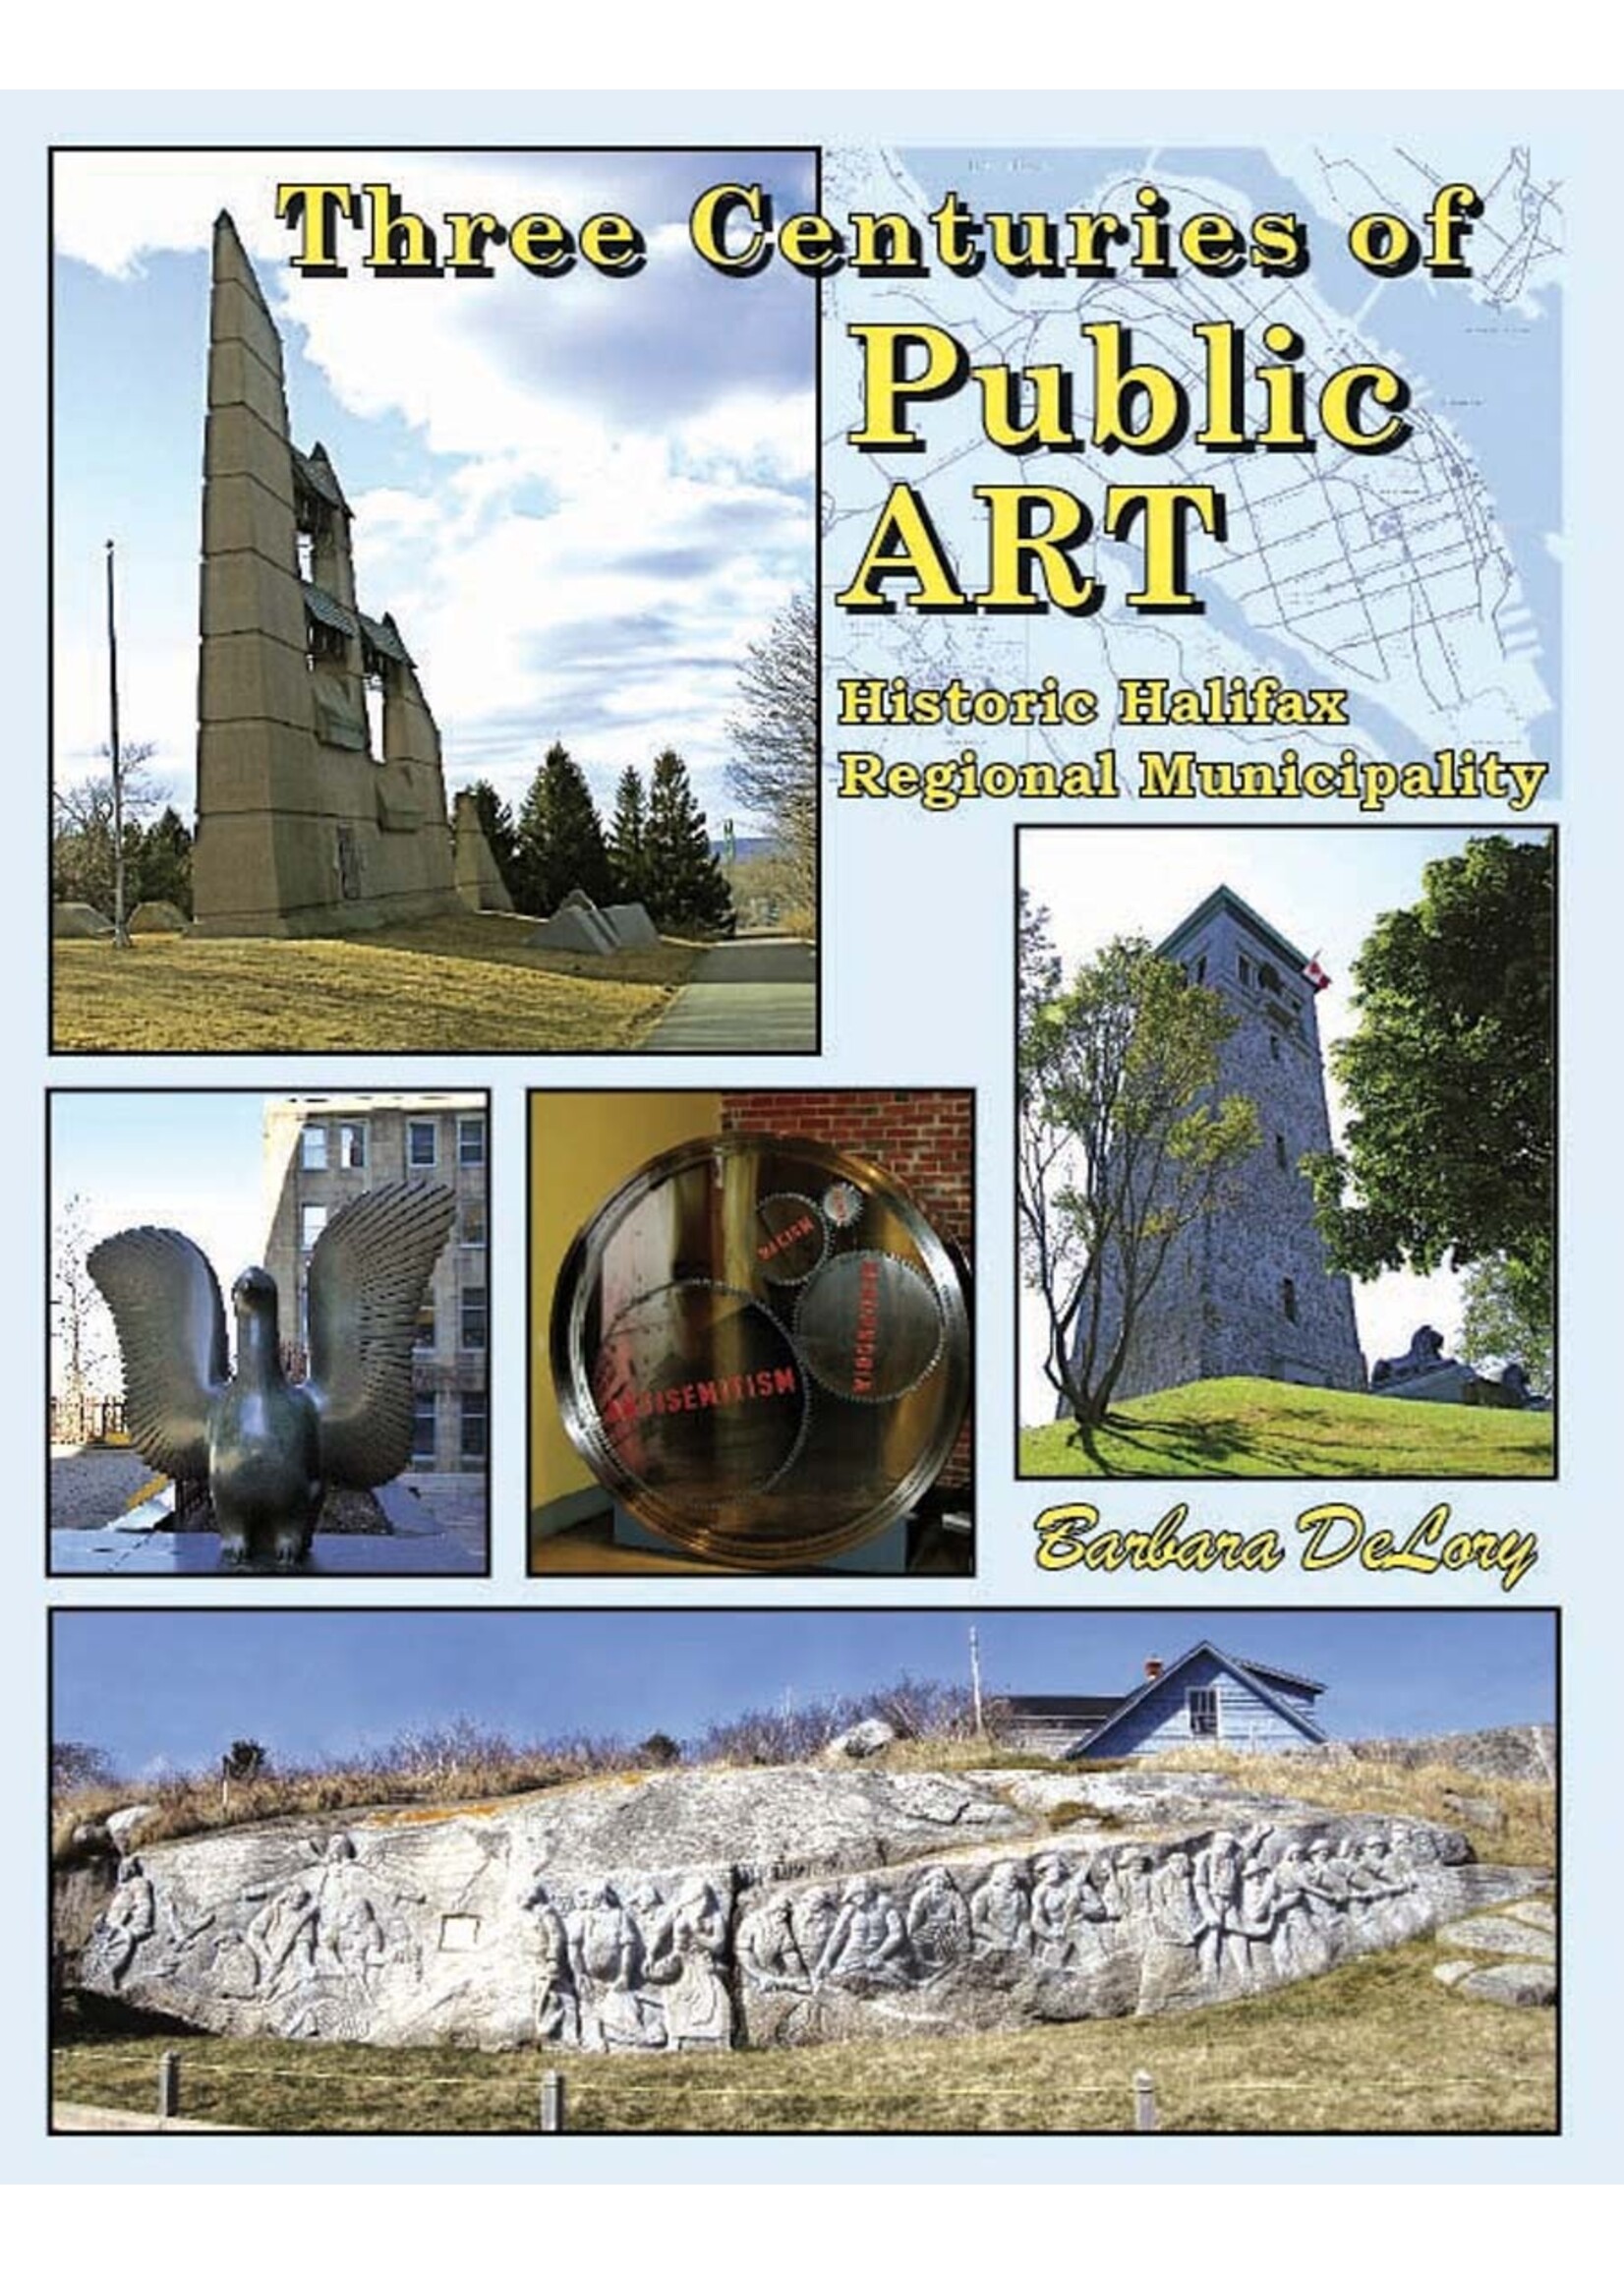 Three Centuries of Public Art: Historic Halifax Regional Municipality by Barbara DeLory